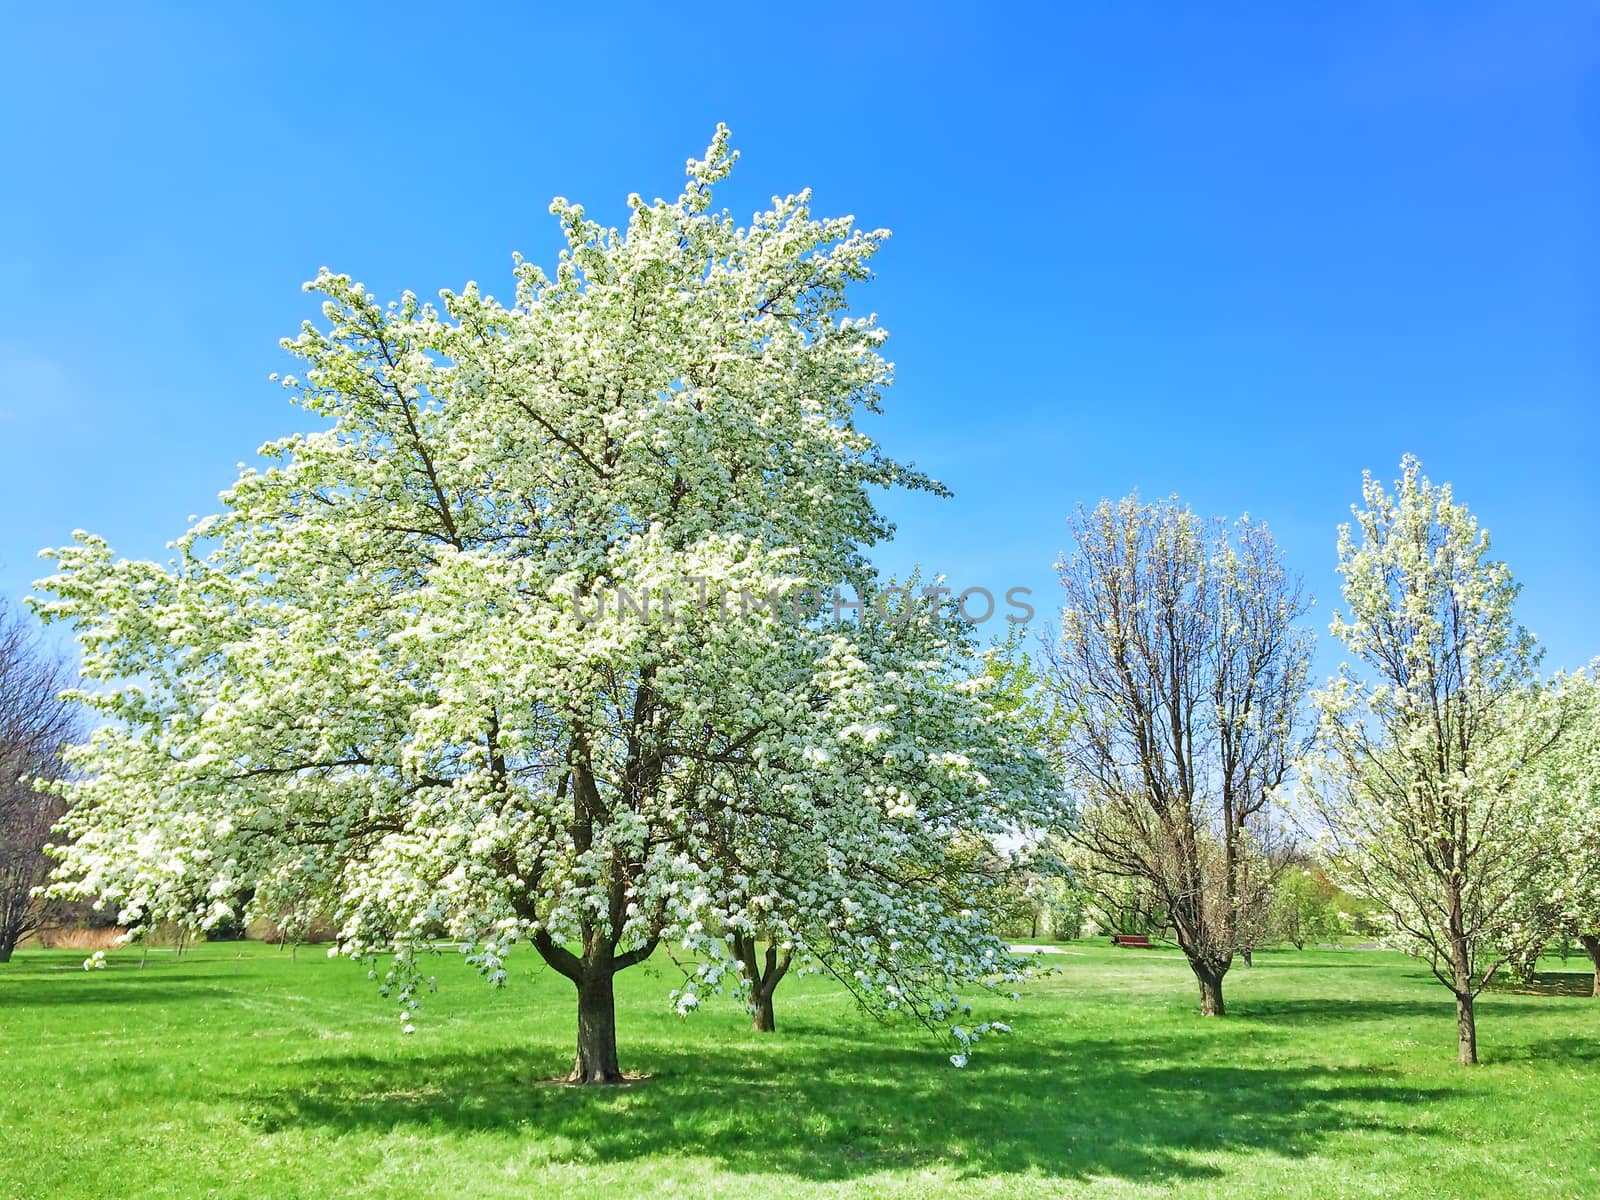 Beautiful blooming tree in spring garden. Quebec, Canada.